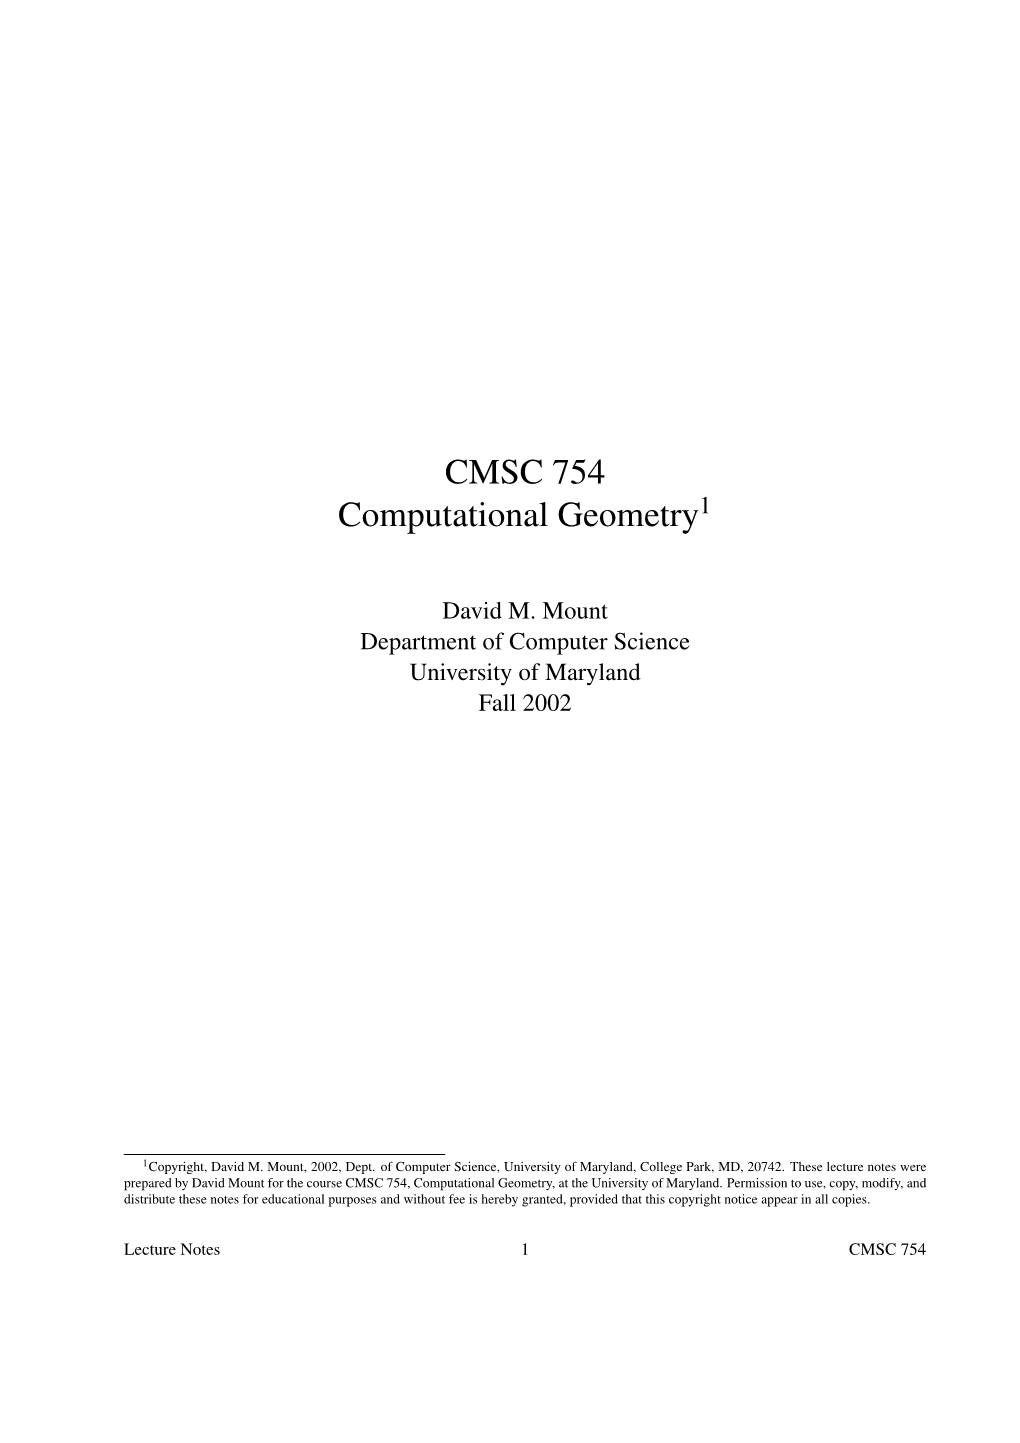 CMSC 754, Computational Geometry, at the University of Maryland